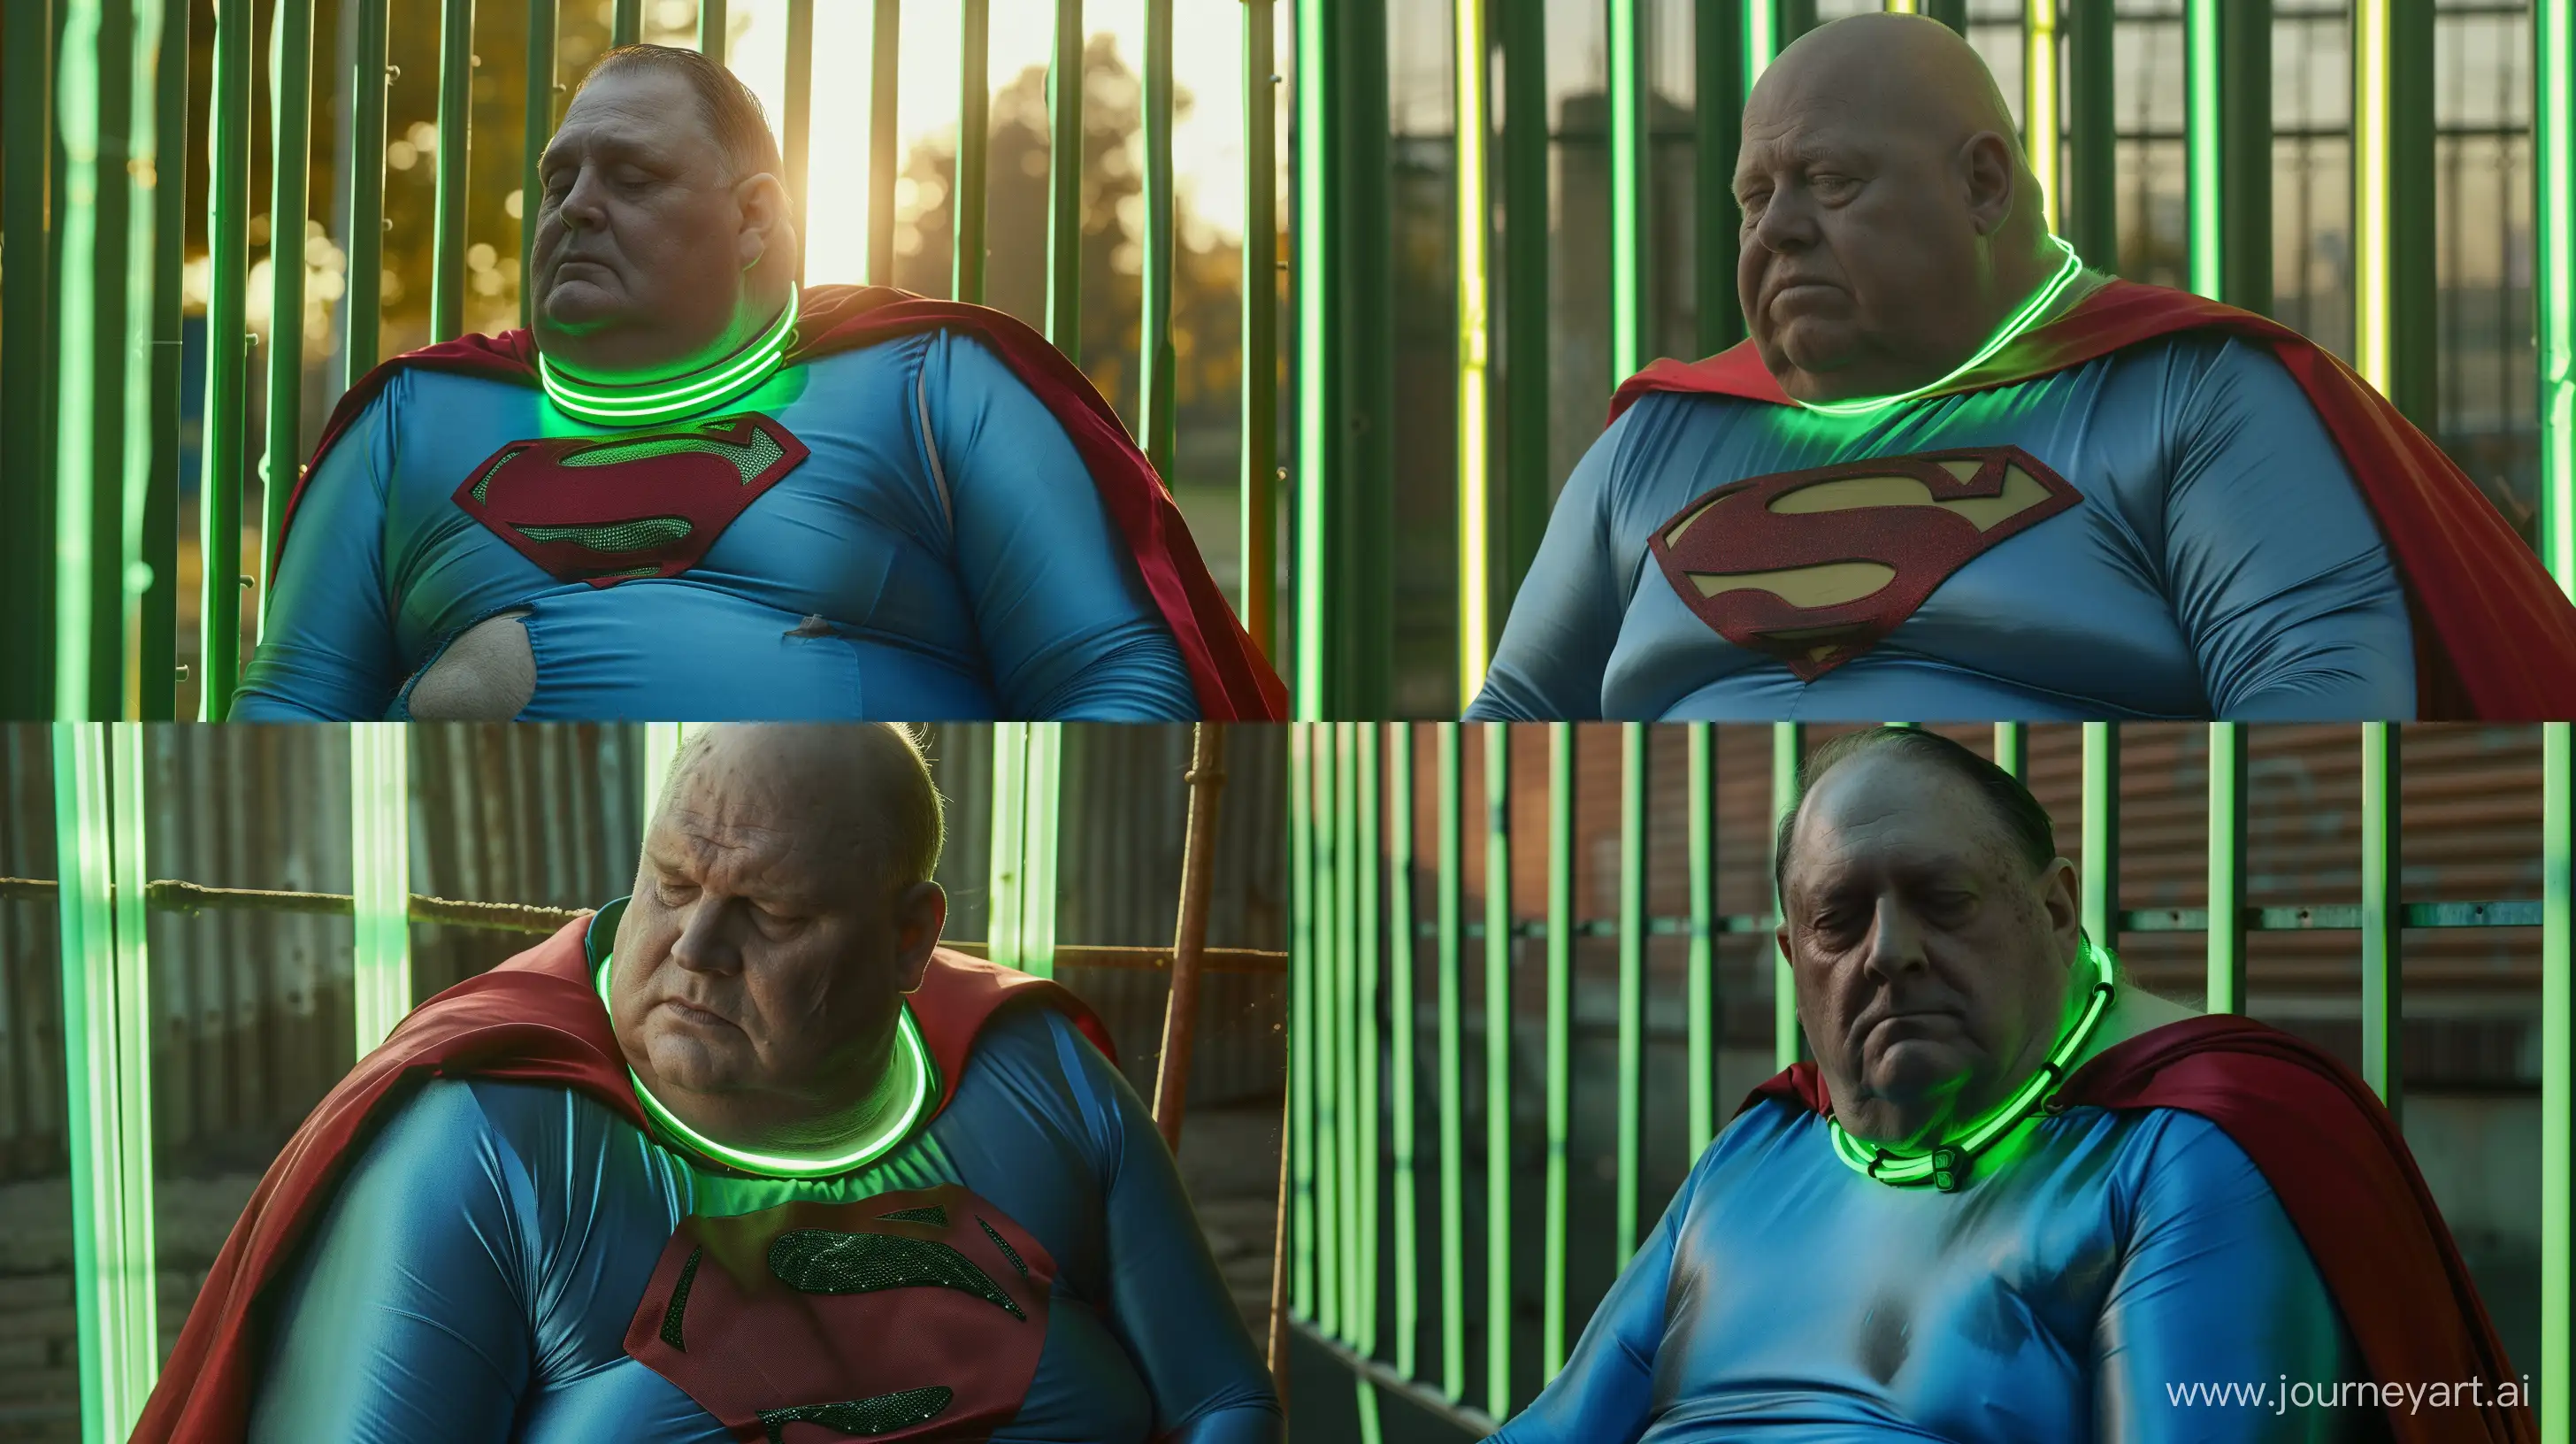 Elderly-Superman-Resting-Against-Glowing-Neon-Bars-Outdoors